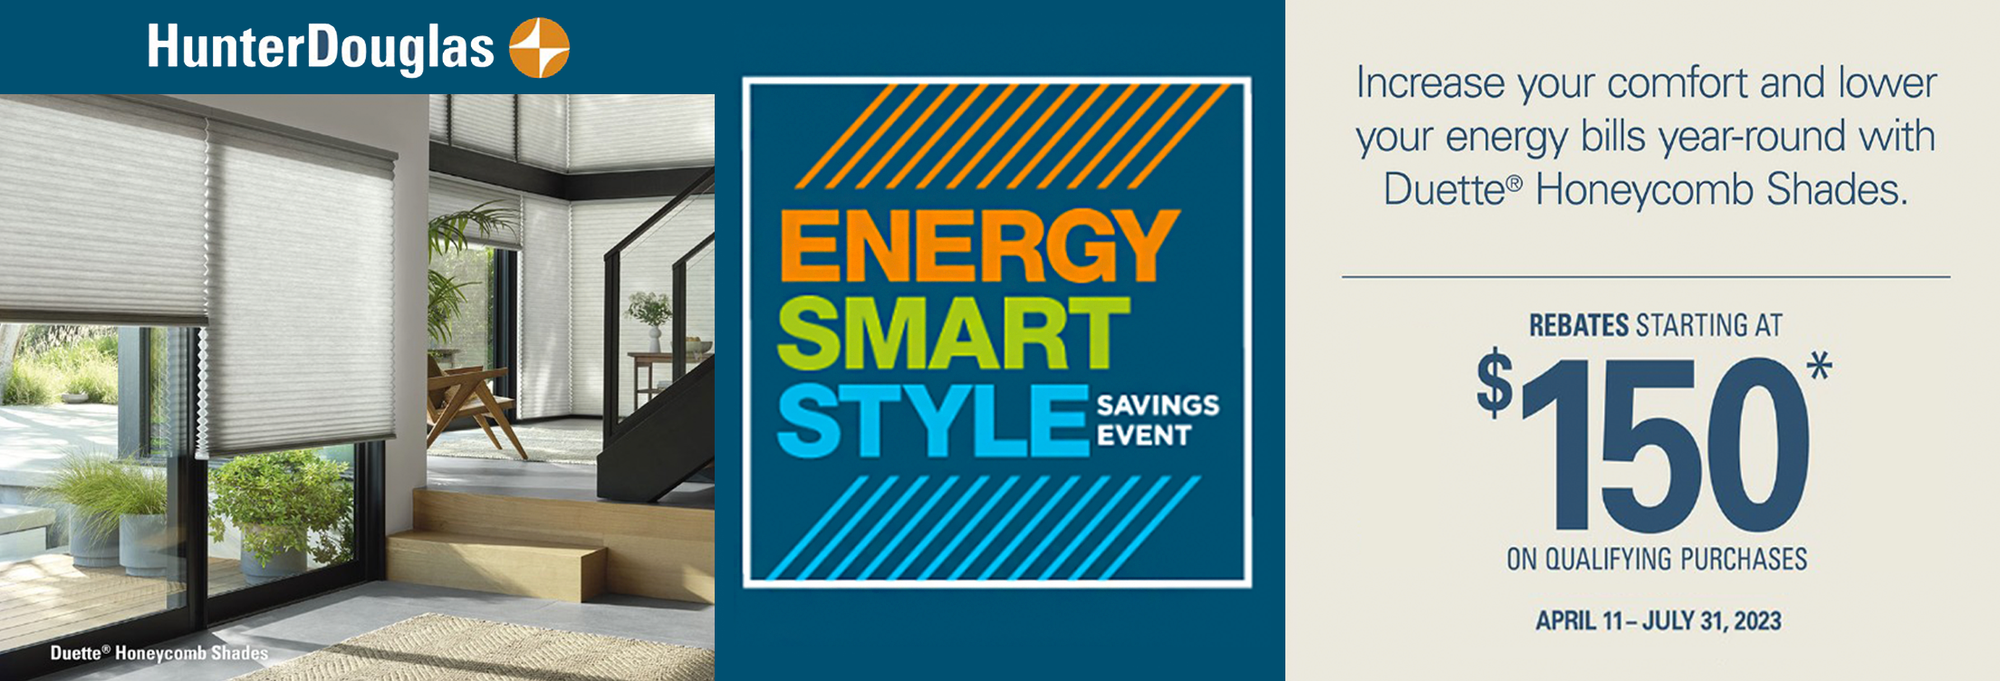 Energy smart savings banner HD